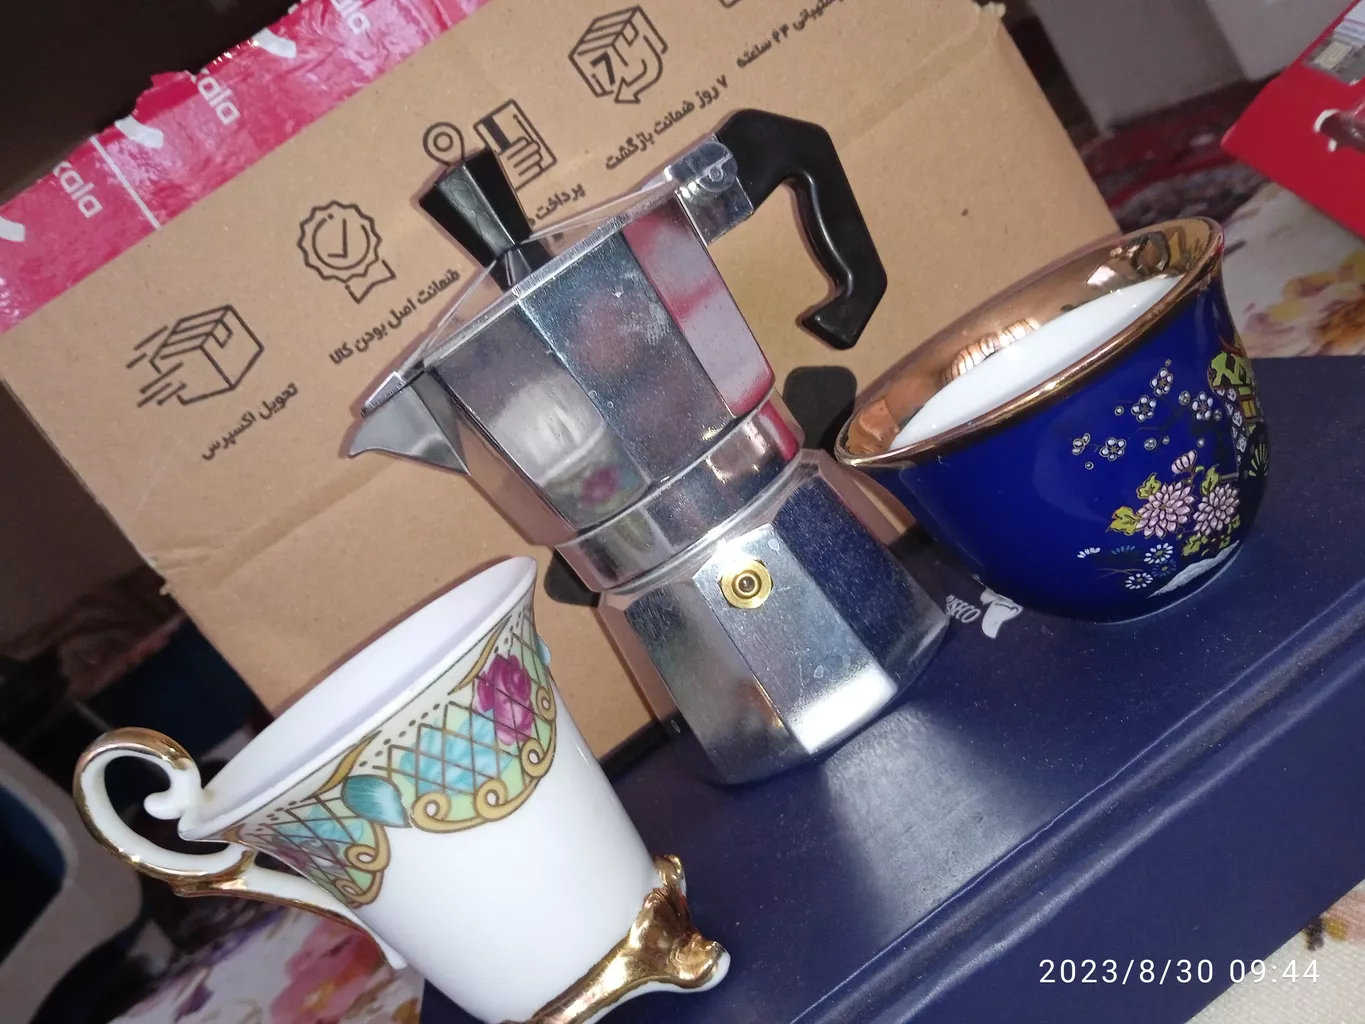 قهوه جوش مدل AR 1068-1 cup